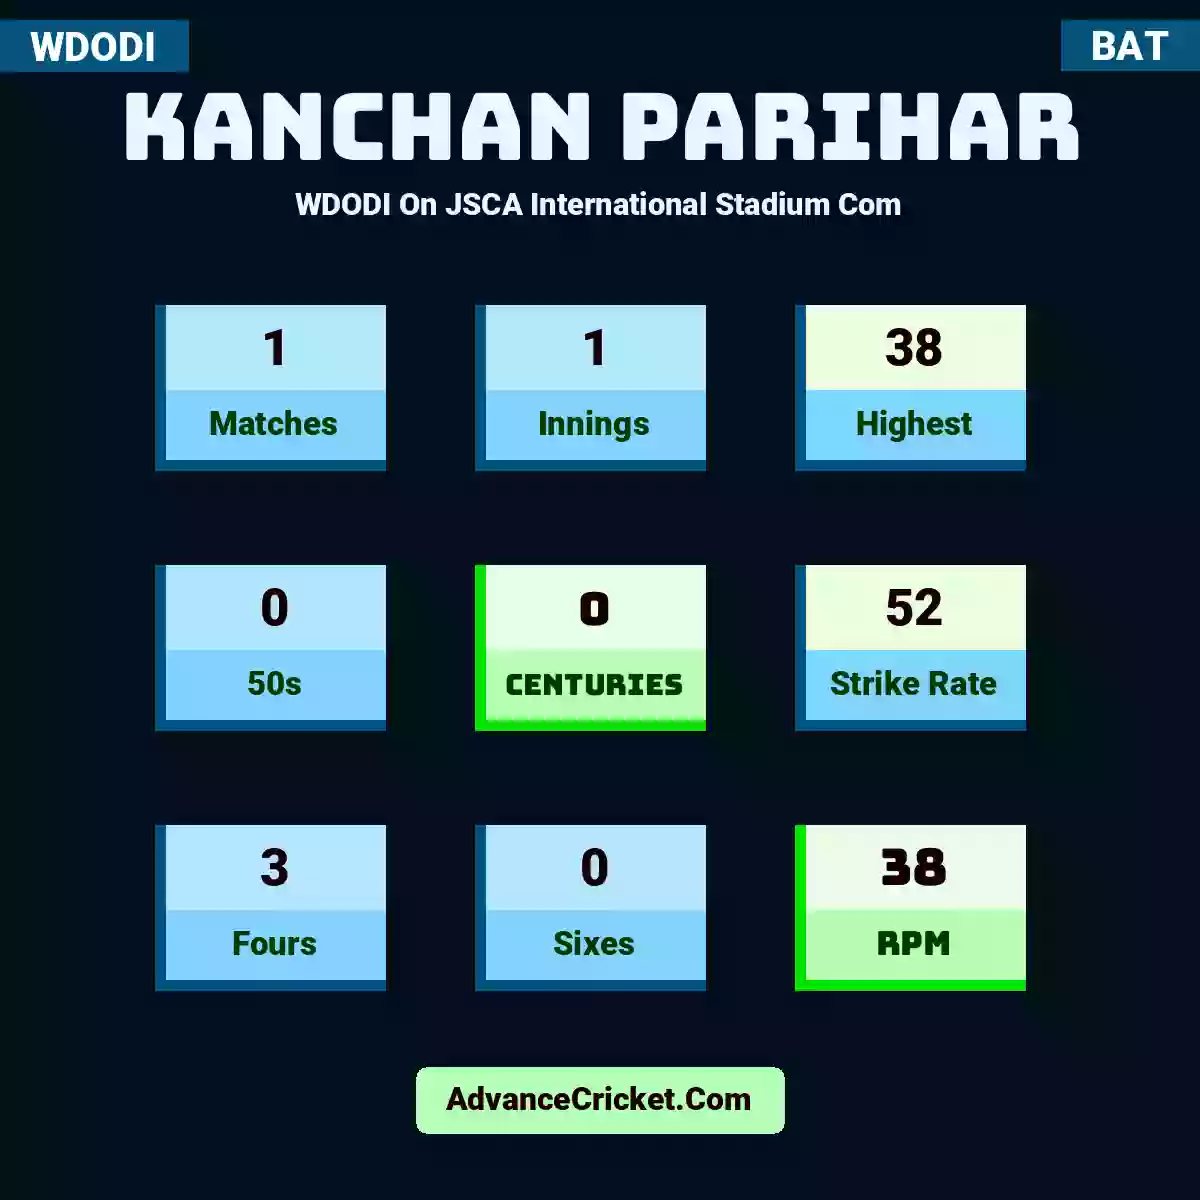 Kanchan Parihar WDODI  On JSCA International Stadium Com, Kanchan Parihar played 1 matches, scored 38 runs as highest, 0 half-centuries, and 0 centuries, with a strike rate of 52. K.Parihar hit 3 fours and 0 sixes, with an RPM of 38.